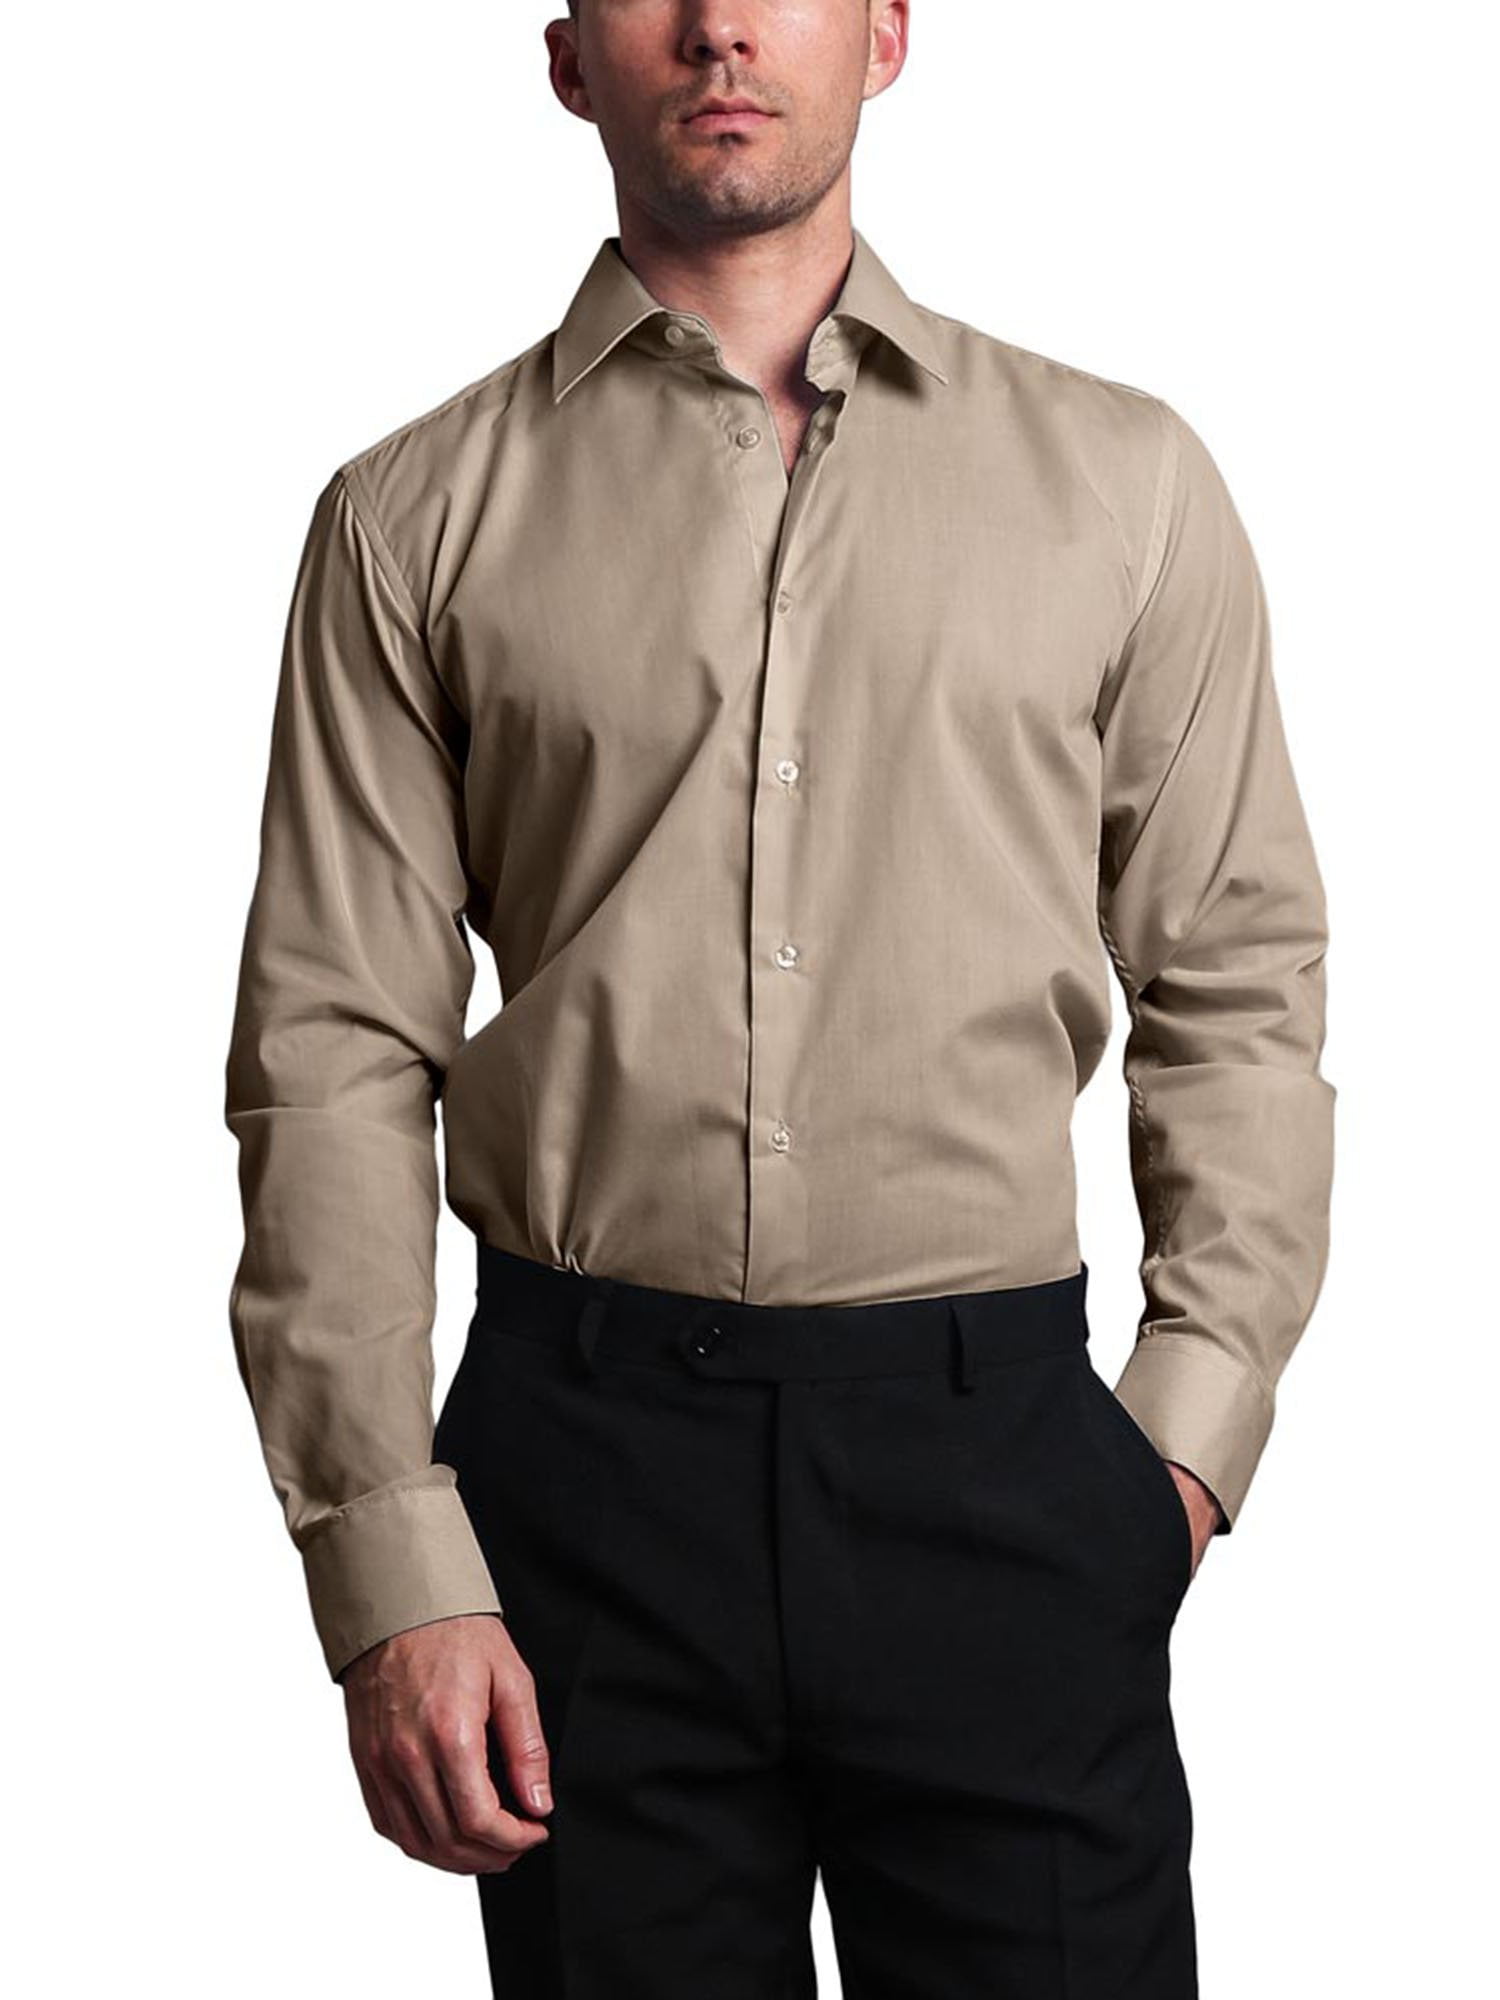 G-Style - G-Style USA Men's Slim Fit Dress Shirt - BEIGE - M/15-15.5/34 ...